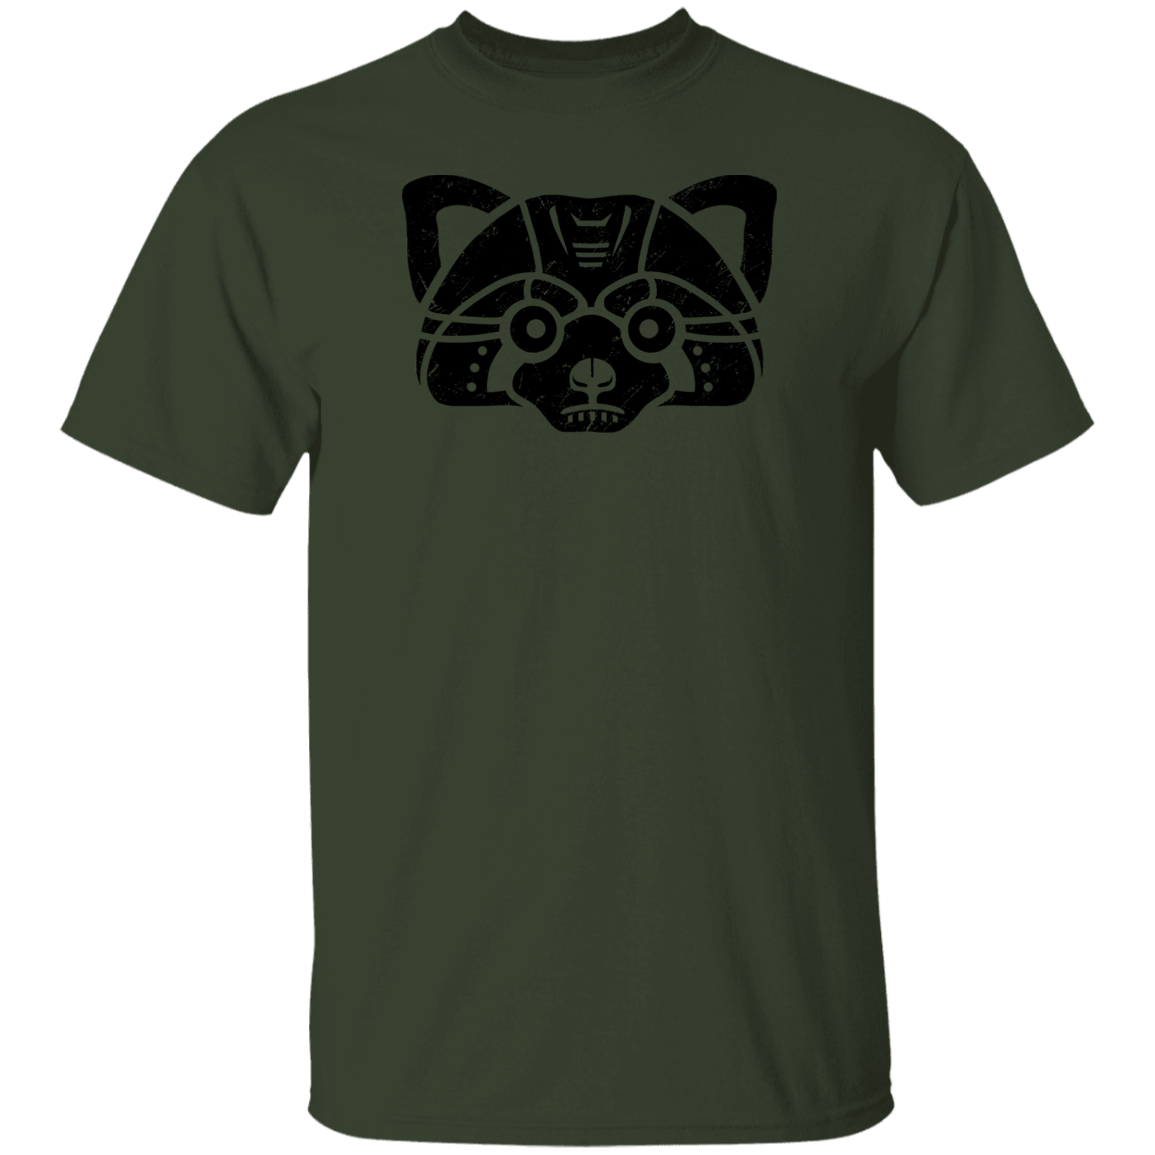 Black Distressed Emblem T-Shirt for Kids (Red Panda/Himalaya)